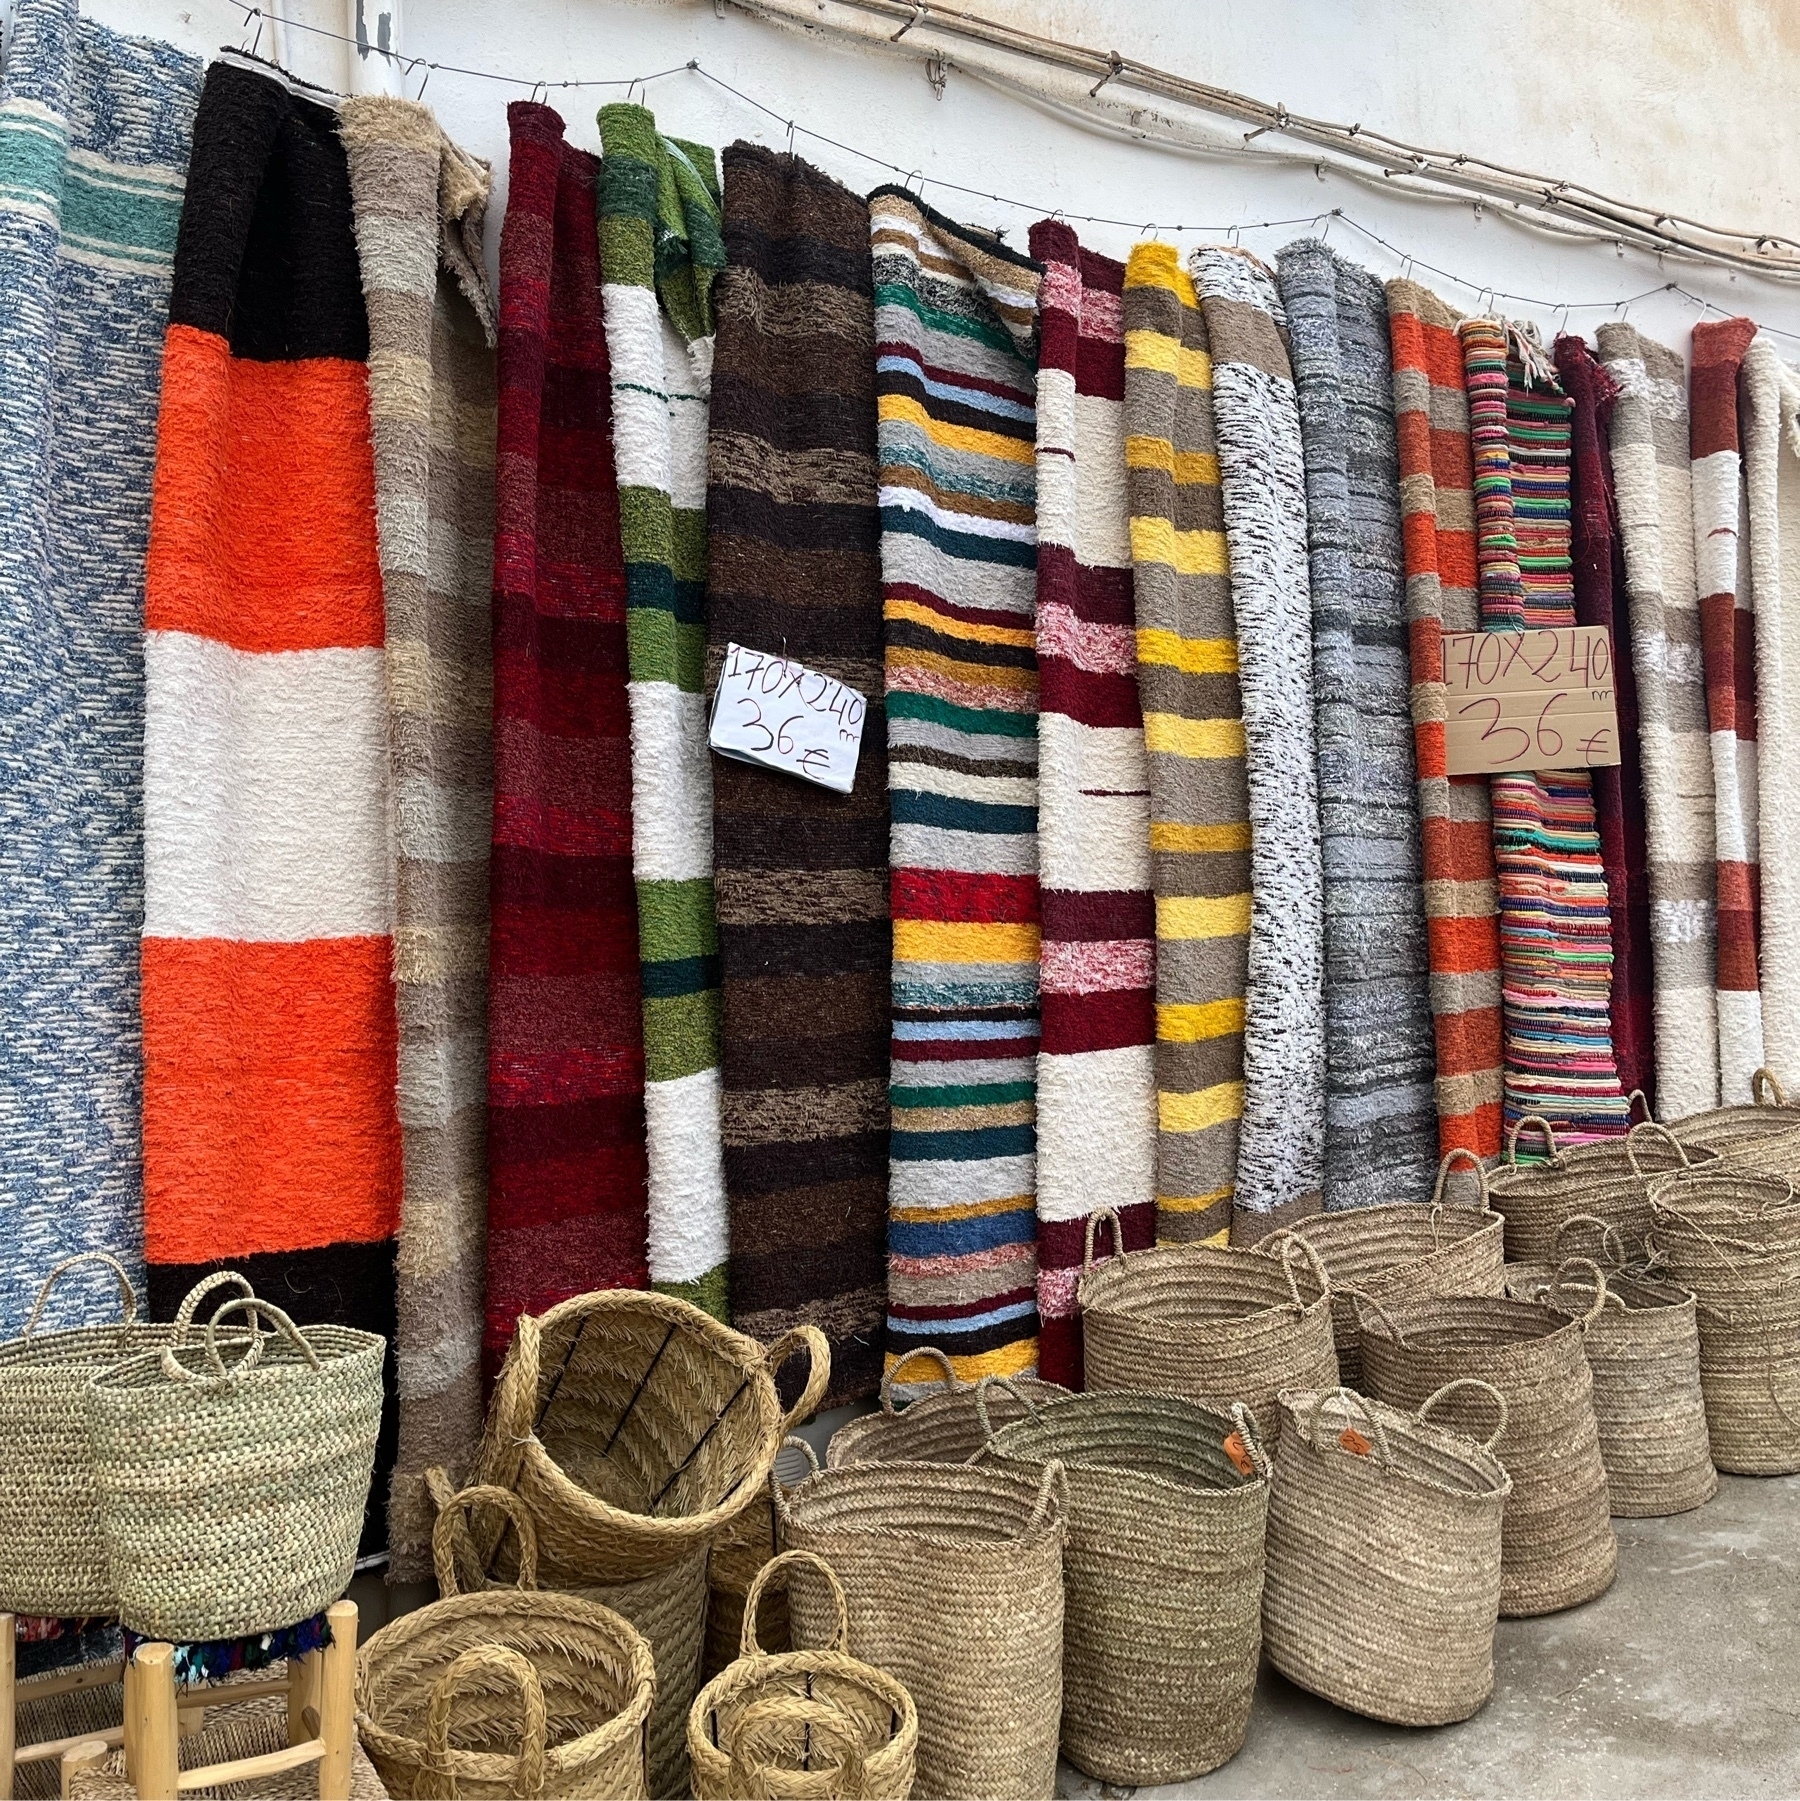 Local shop selling handmade rugs